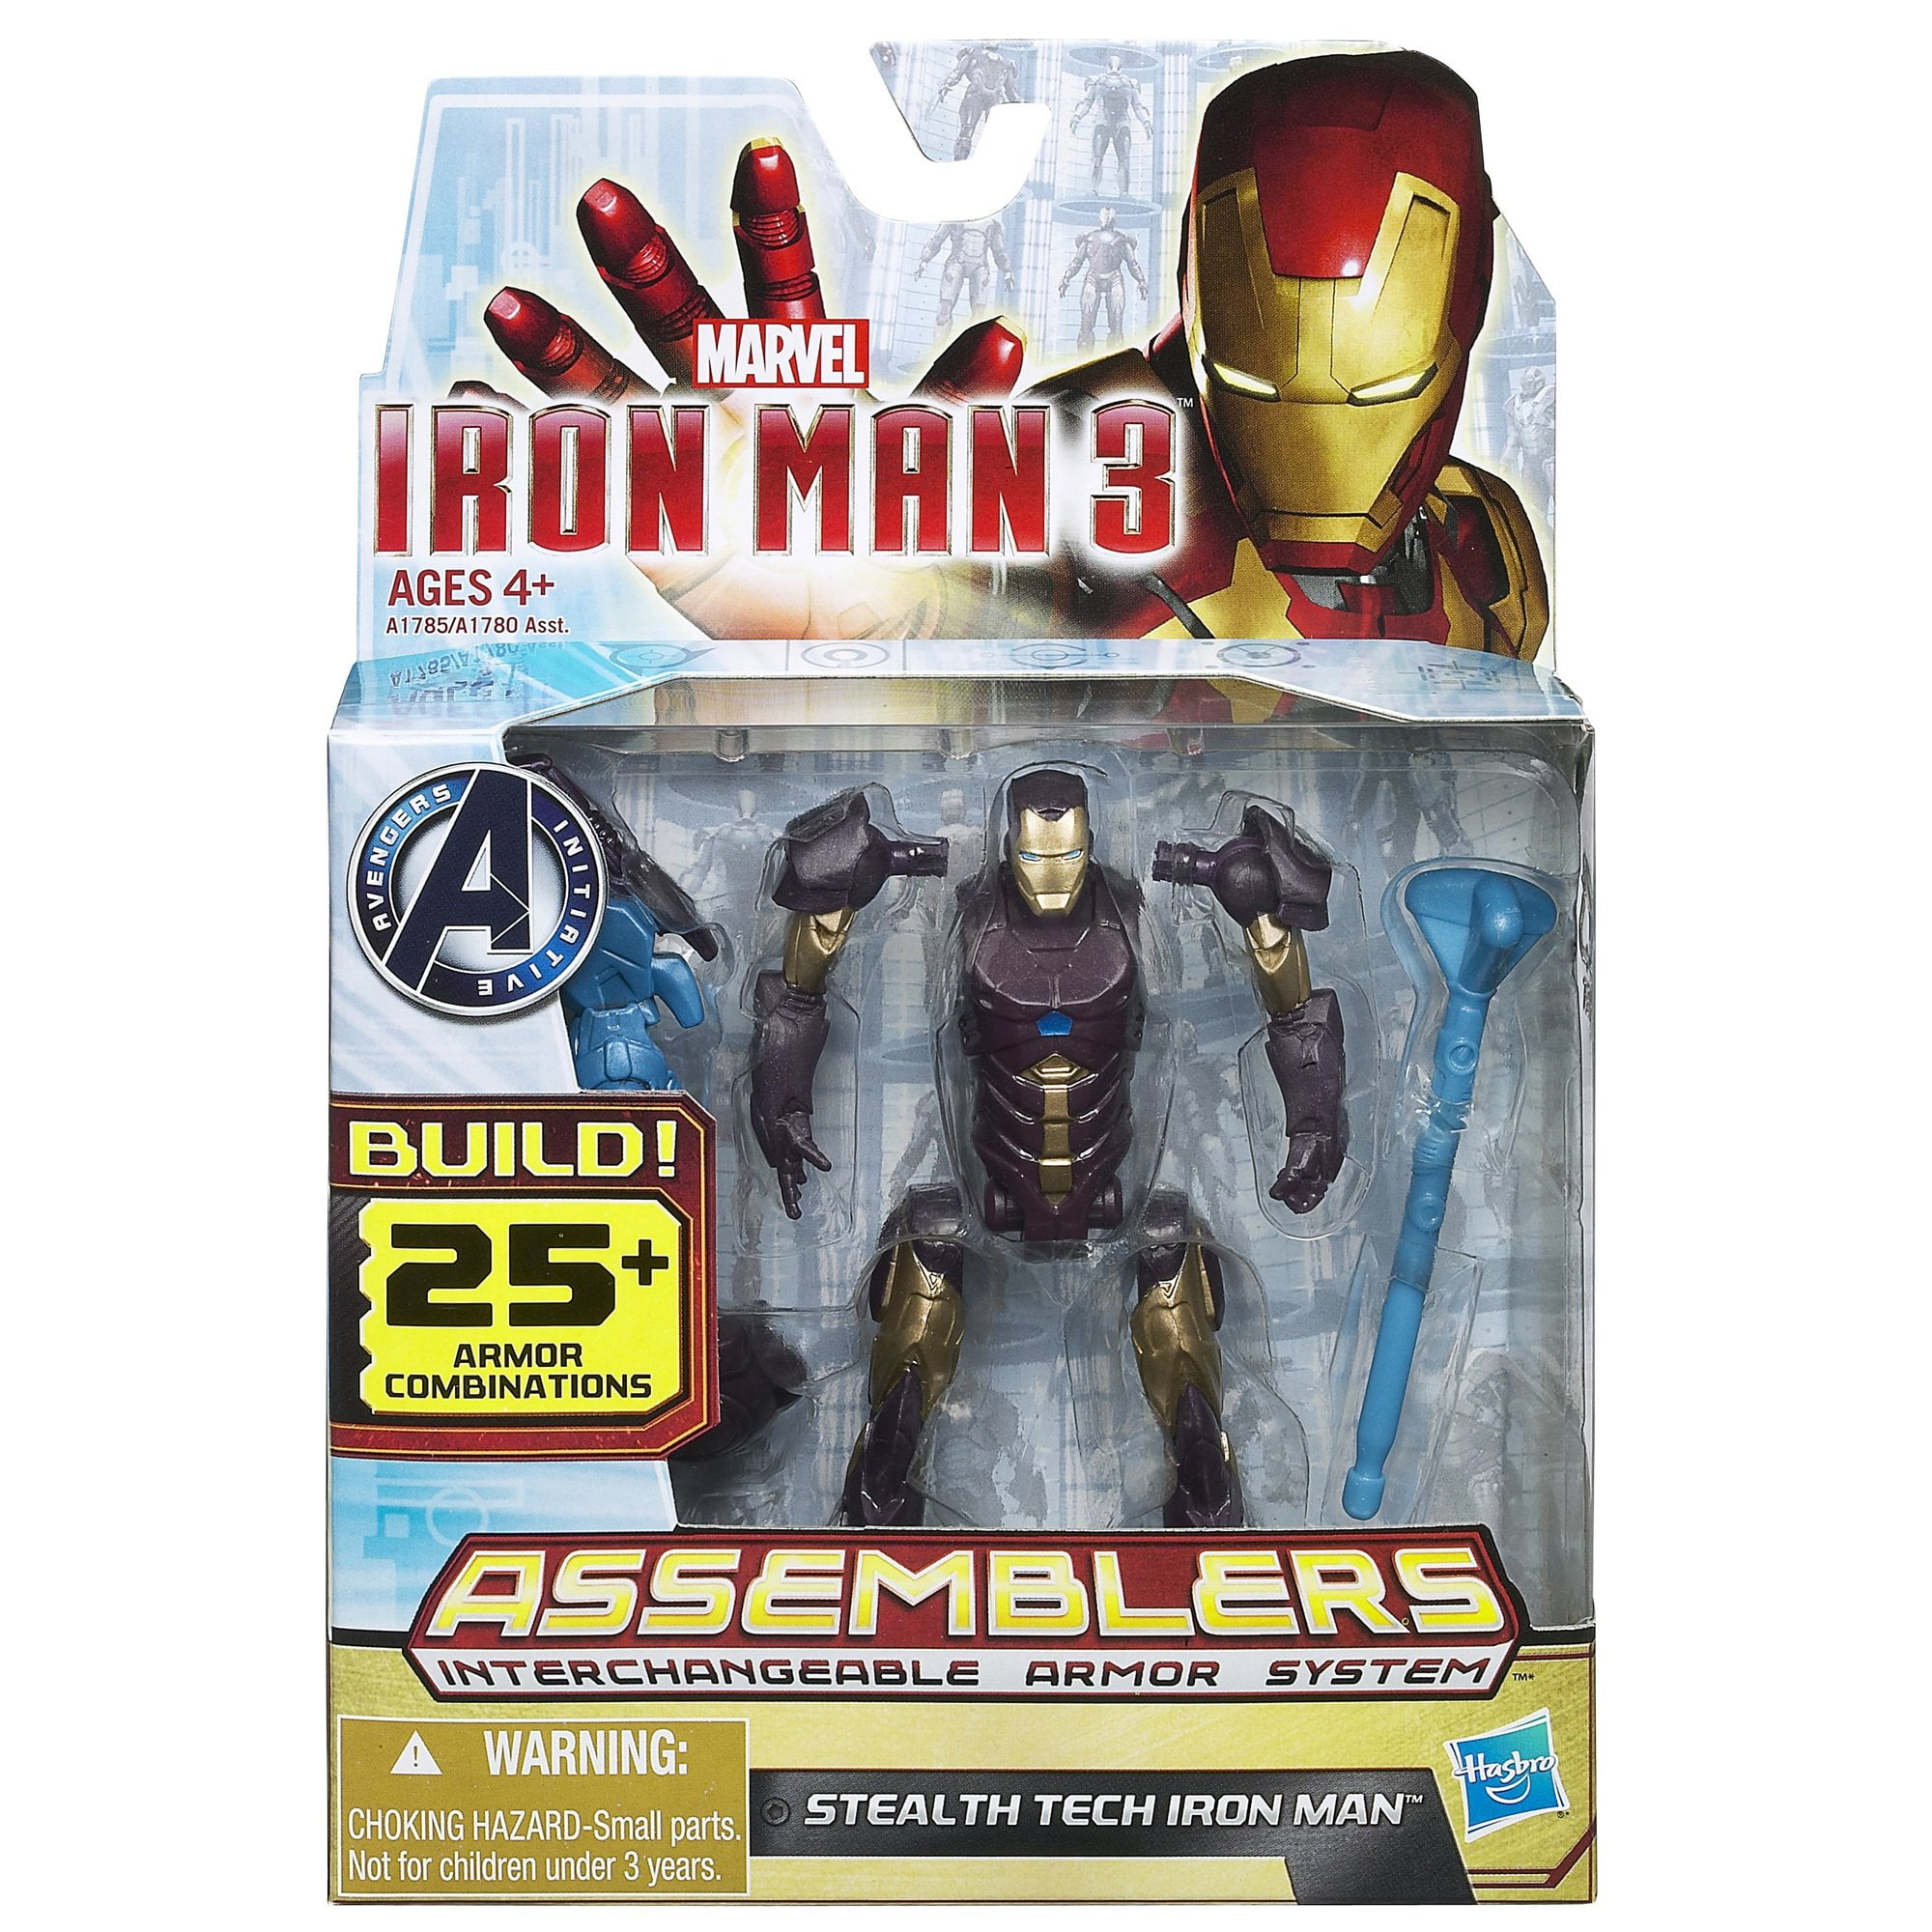 Details about   Iron Man 3 Assemblers Stealth Tech Iron Man #04 Marvel Avengers 2012 